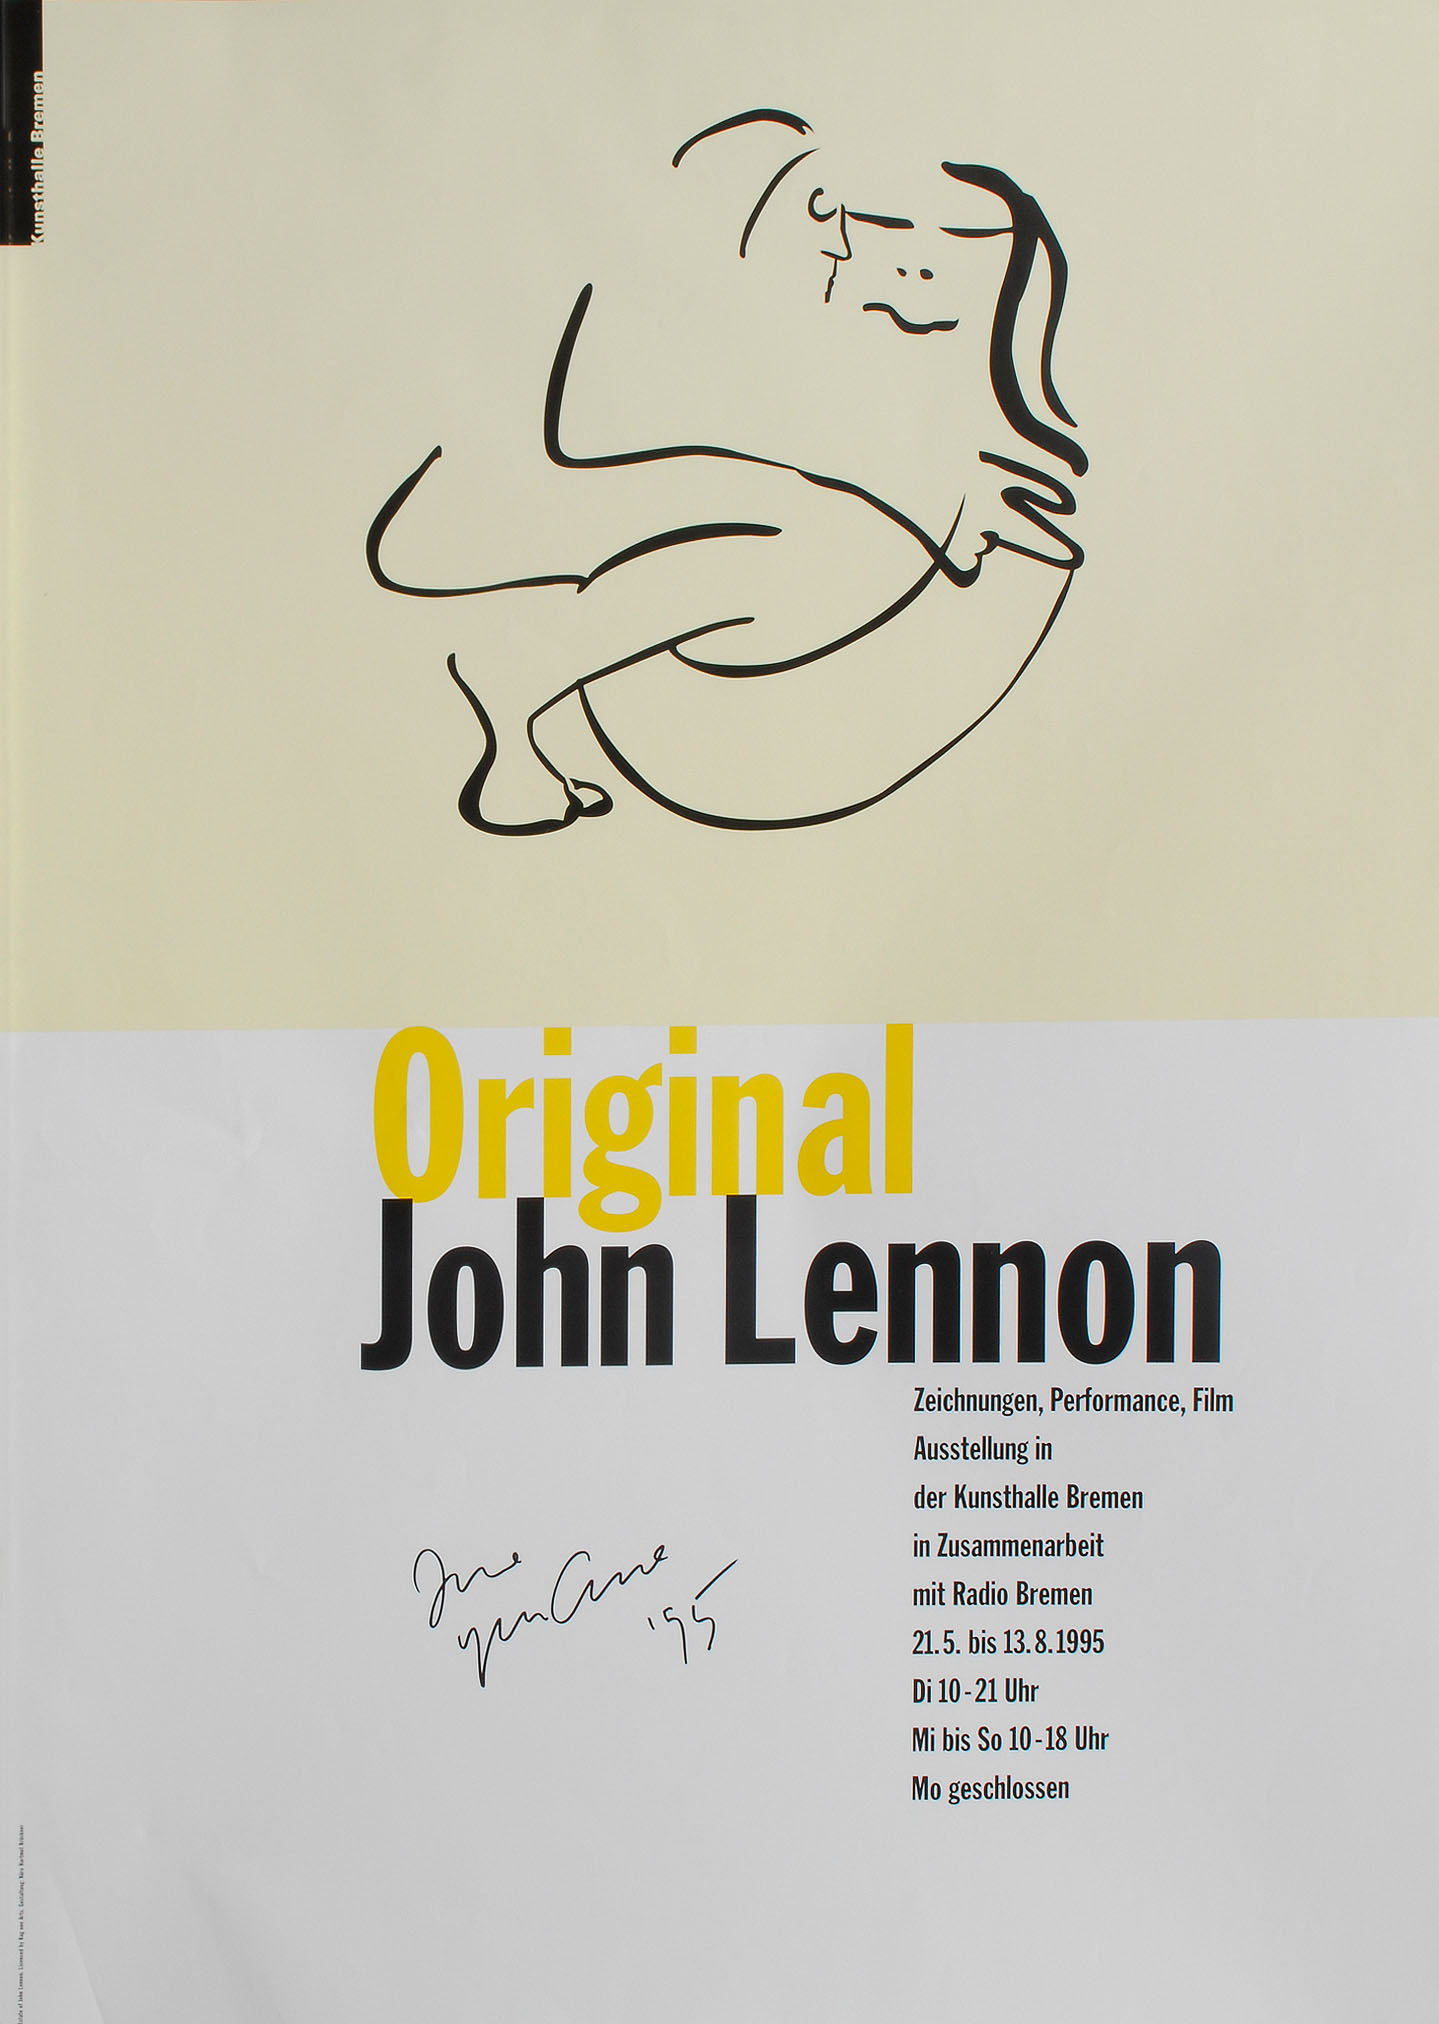 Handsigniertes Plakat: 'Original John Lennon' in der Kunsthalle Bremen (1995)